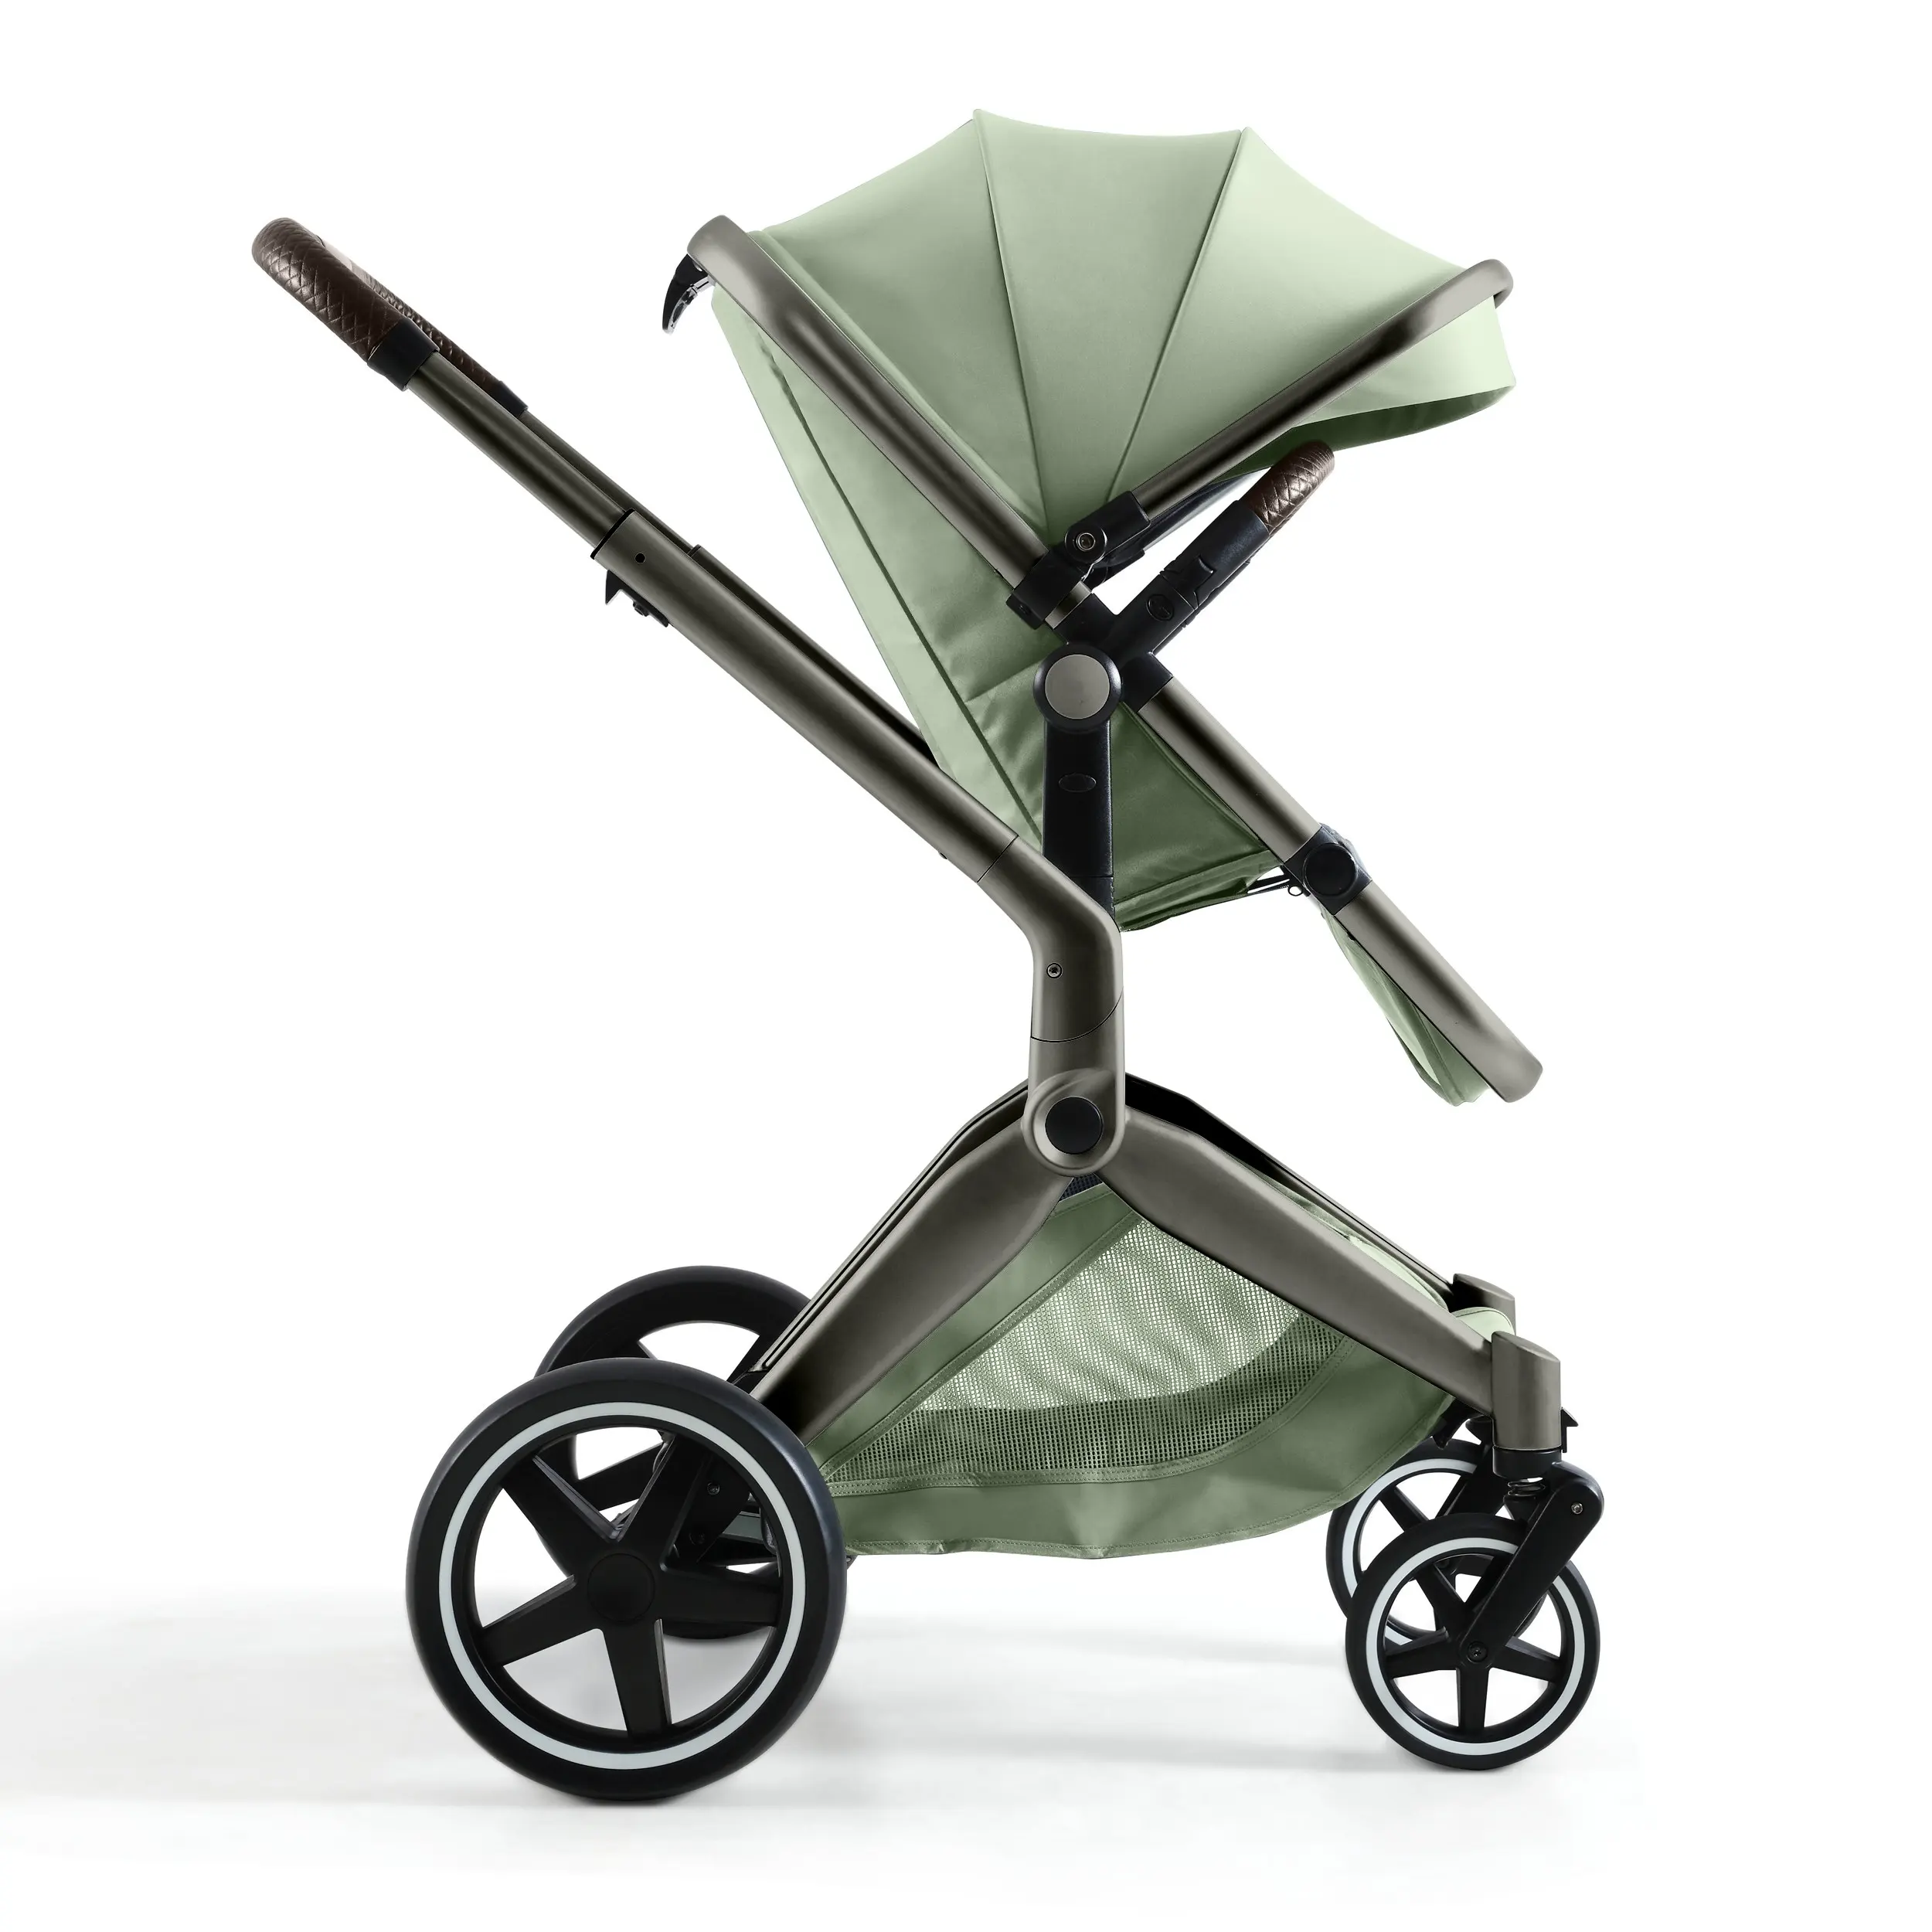 WULONZUS Multifunction Pushchair High Portable Lightweight Travel Pram implementation Baby Stroller 3 in 1